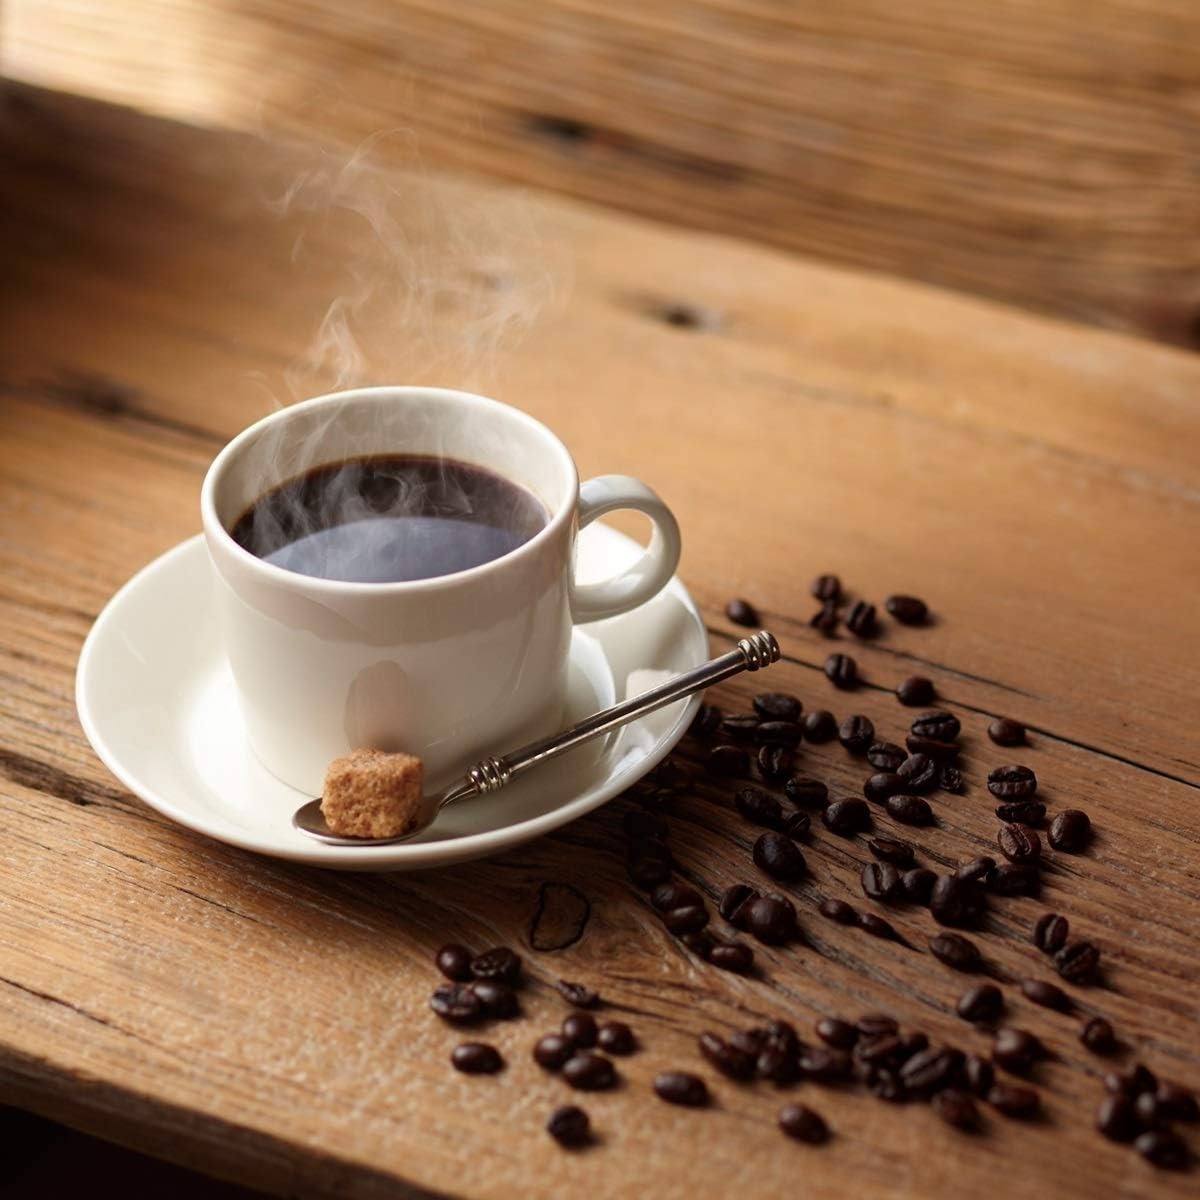 MAXIM Aroma blend Coffee แม็กซิม อโรม่า กาแฟสำเร็จรูป รีฟิล 170g แบบ 85 แก้ว